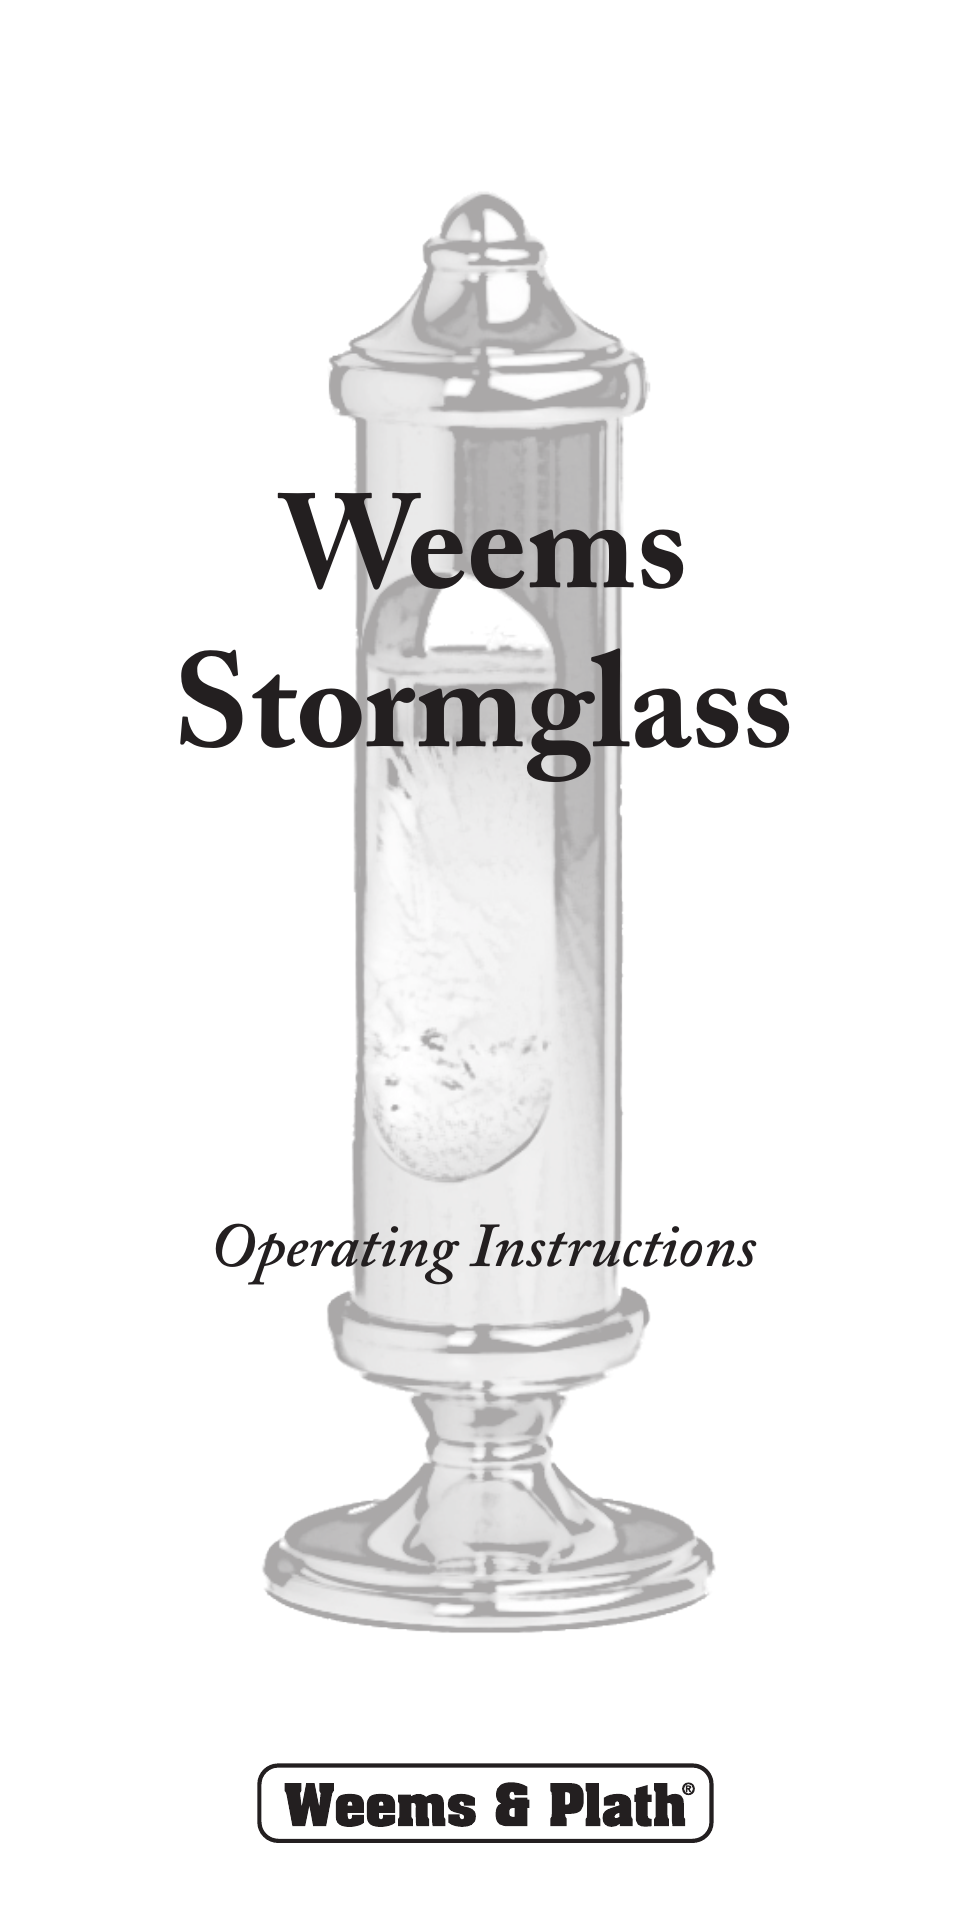 Weems Chrome Stormglass with display